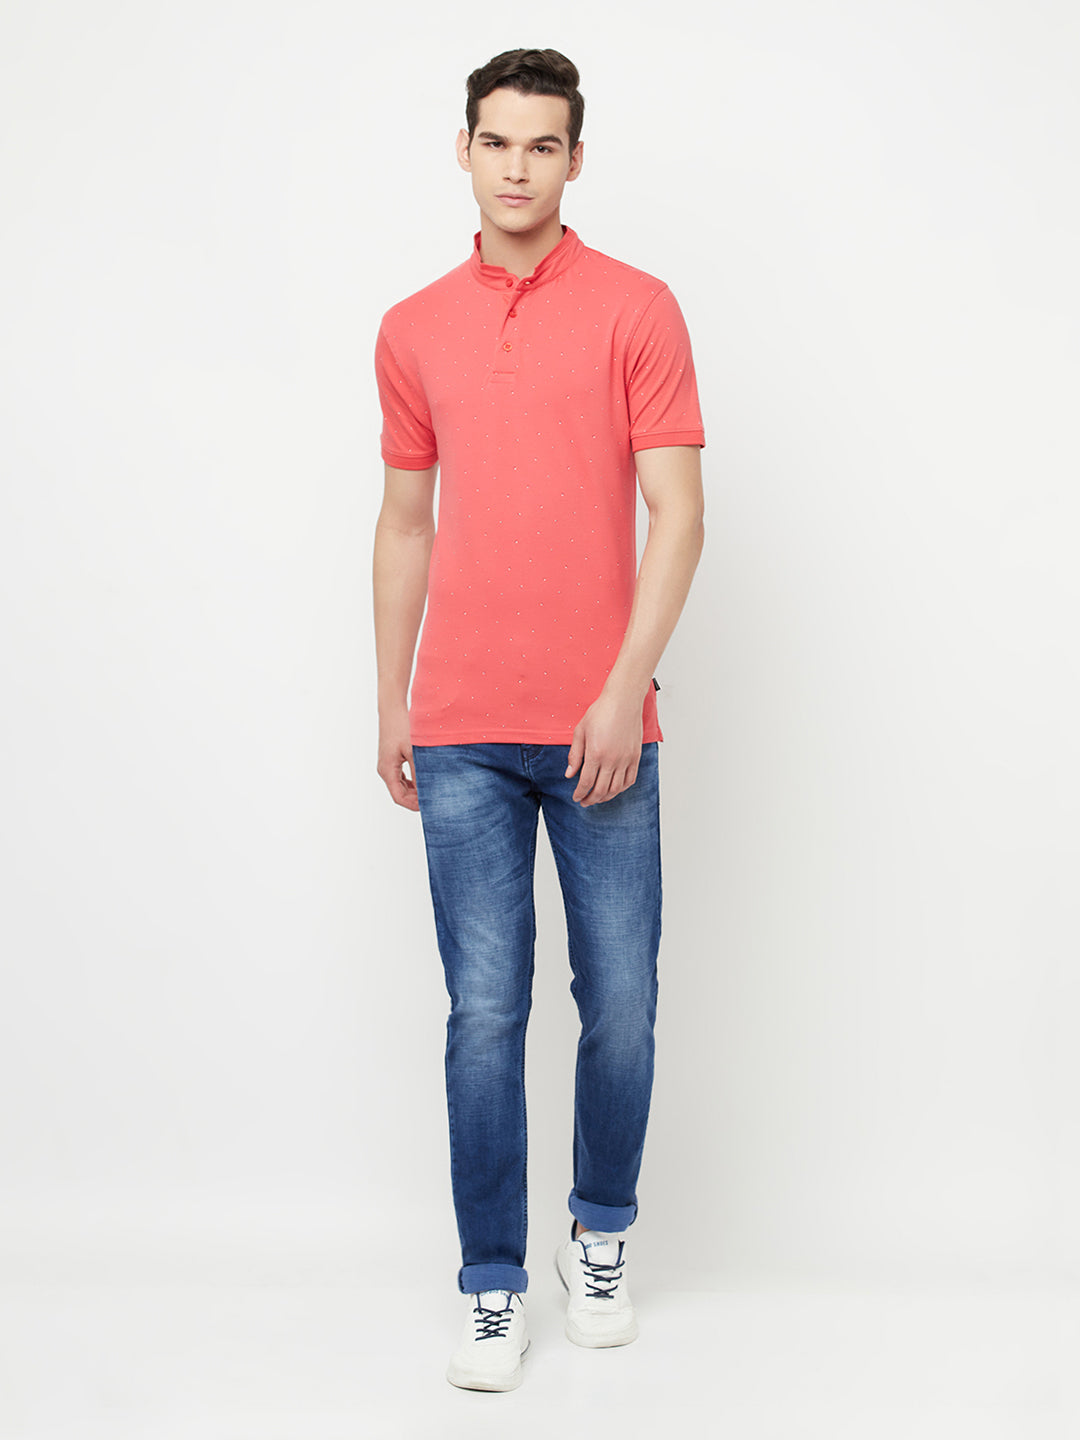 Pink Printed Mandarin Collar T-Shirt - Men T-Shirts